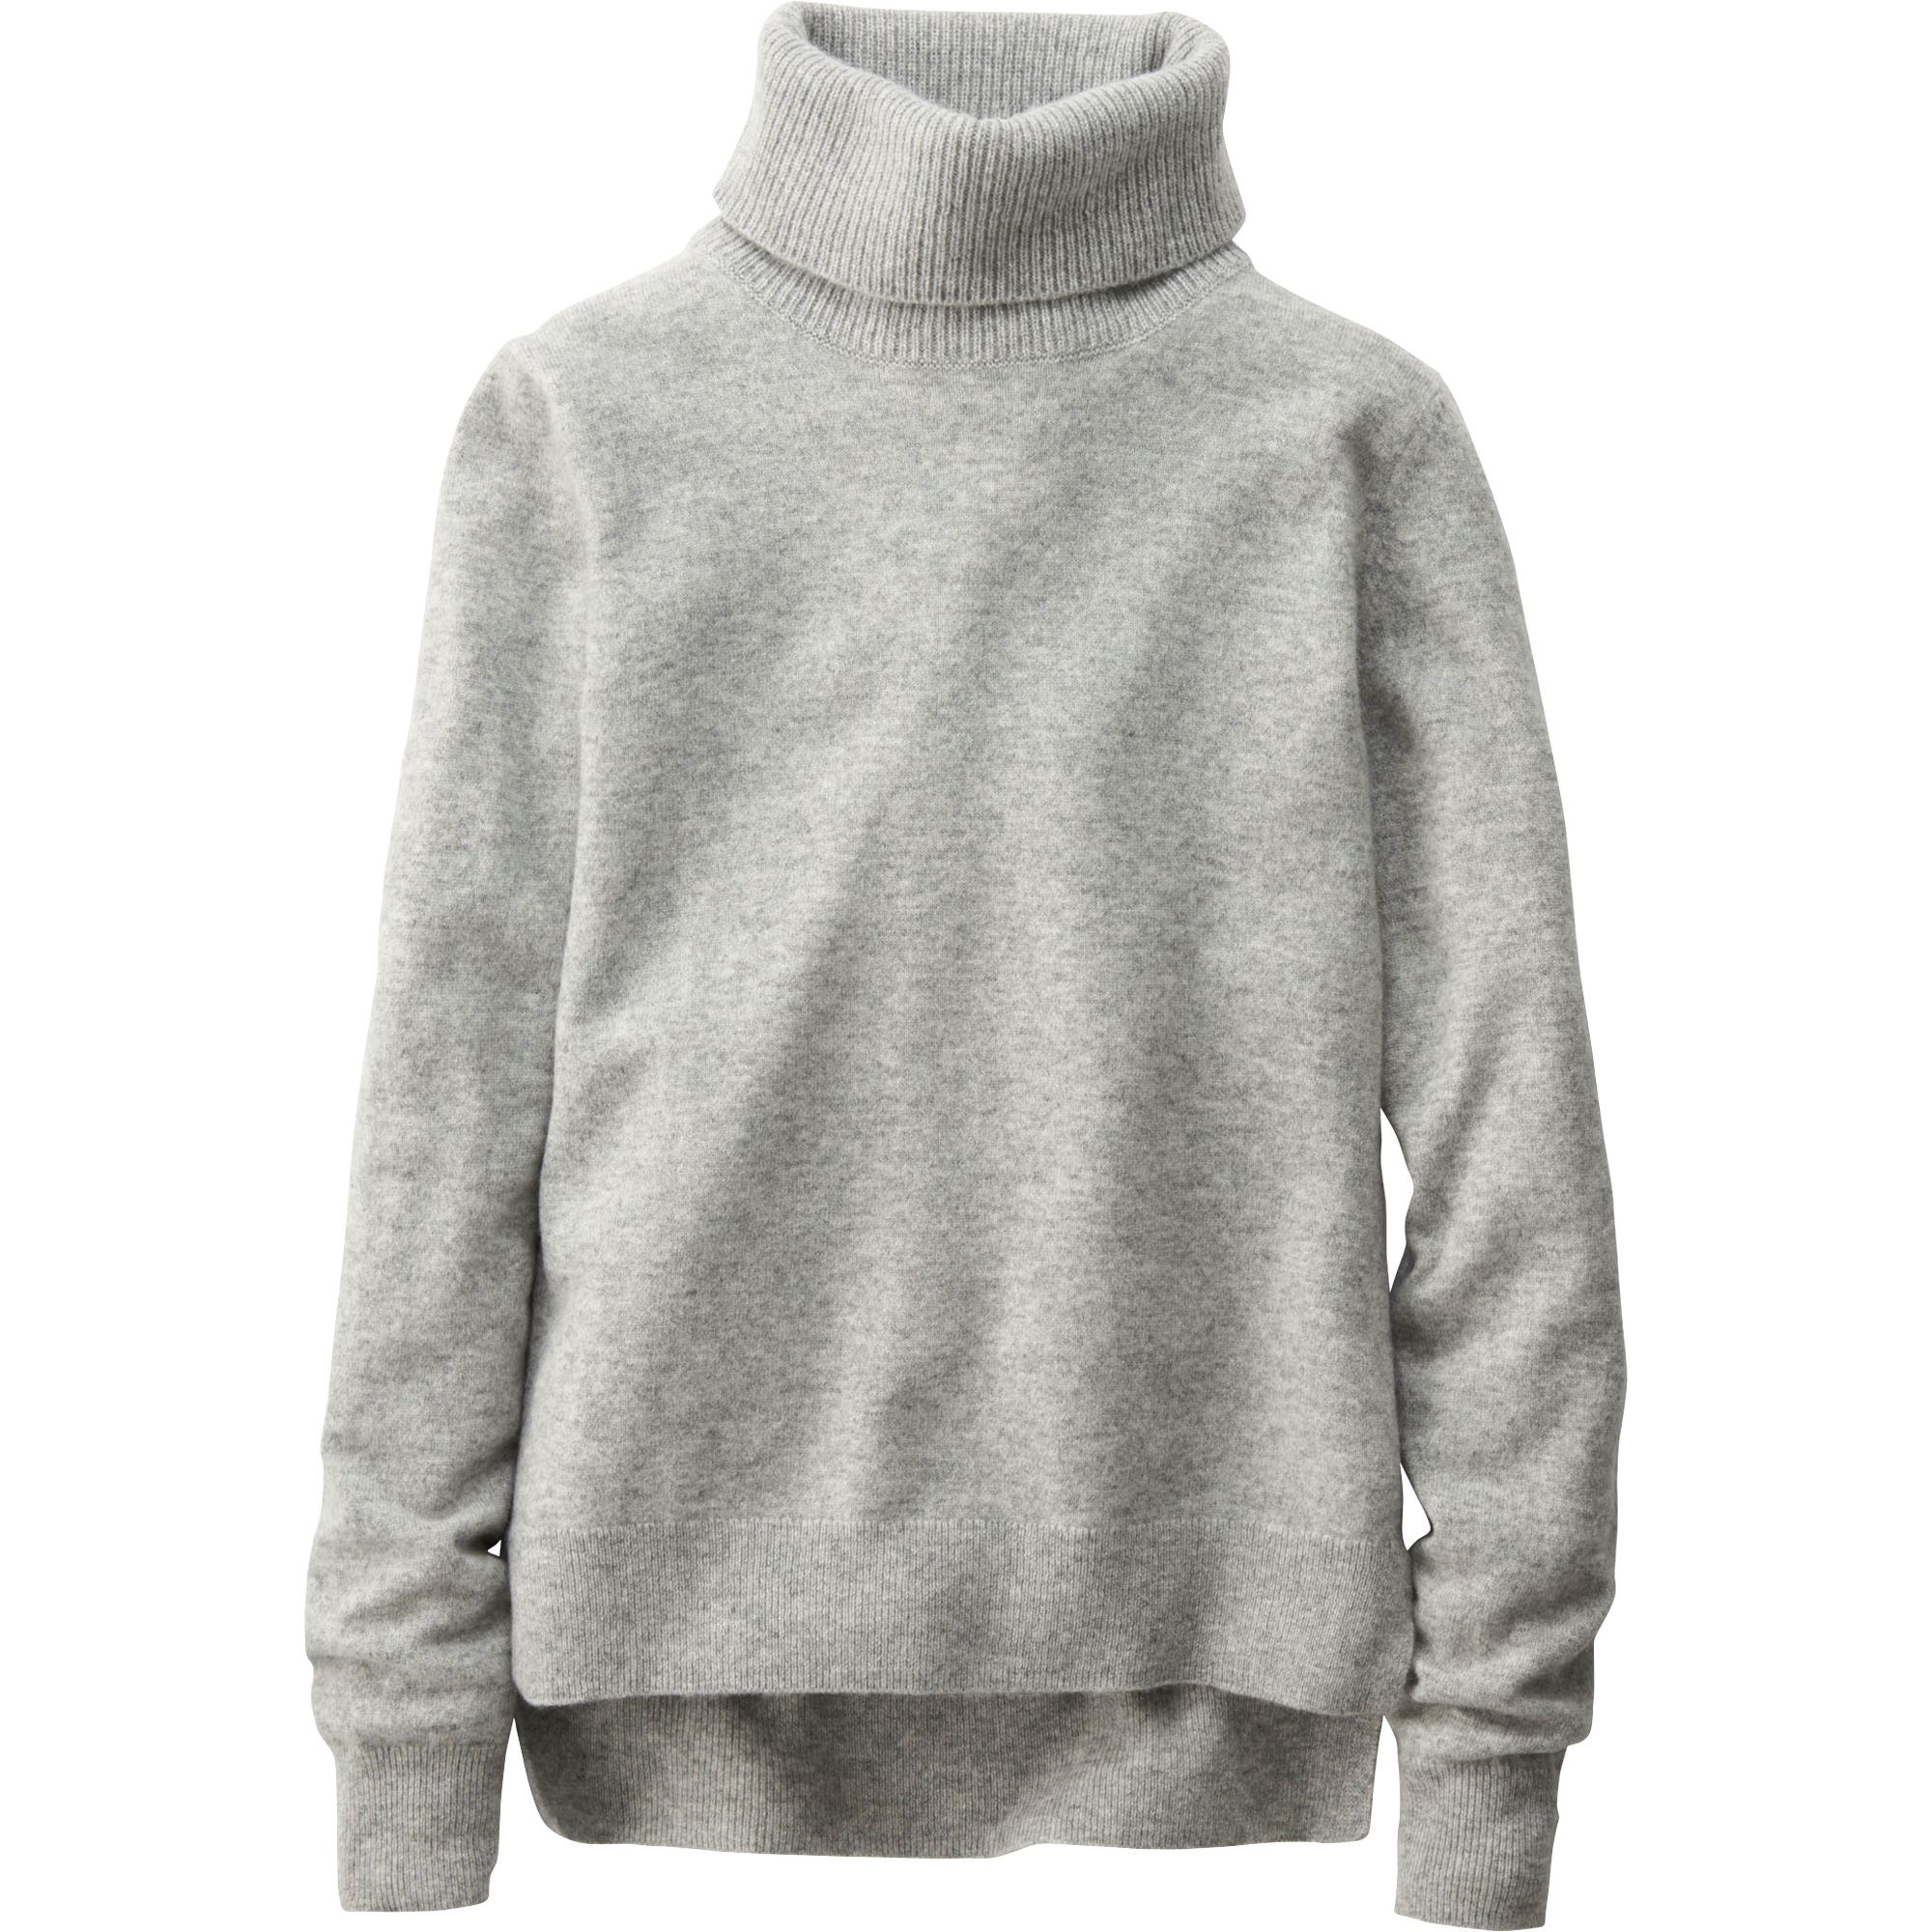 Uniqlo Women Idlf Cashmere Turtleneck Sweater in Gray (LIGHT GRAY) | Lyst